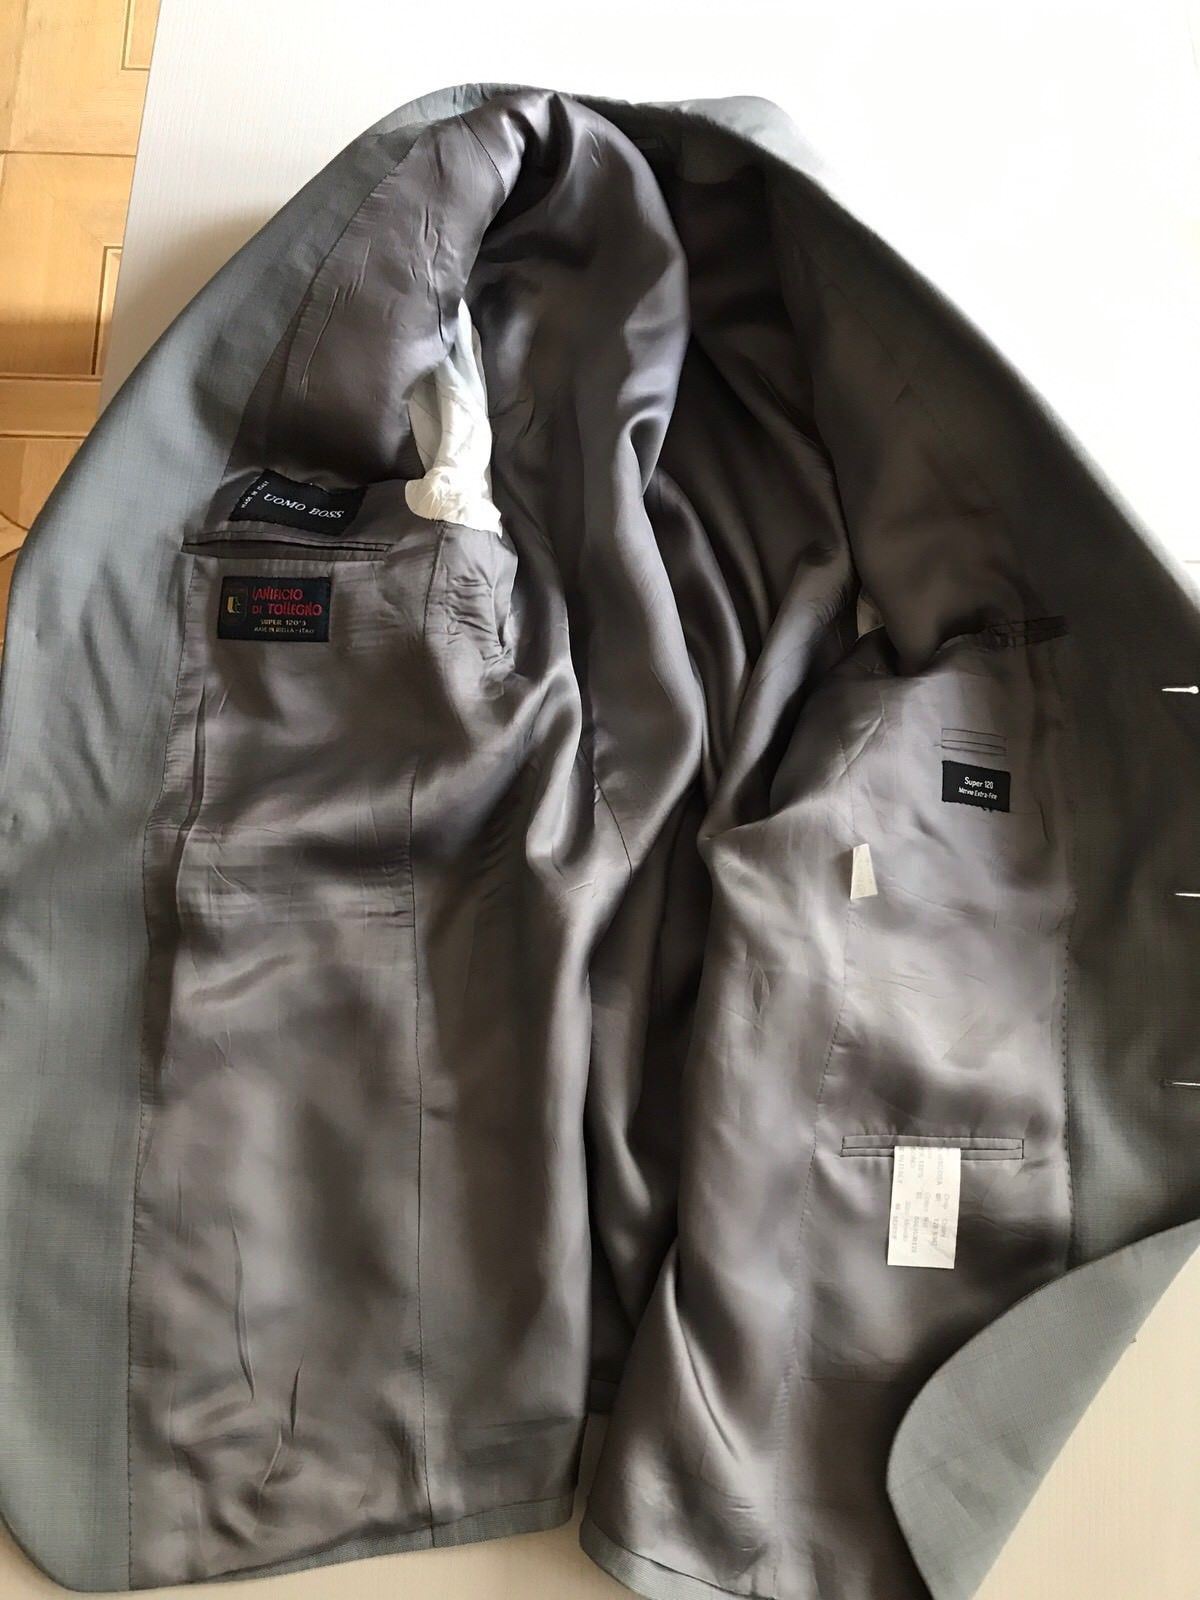 Uomo Boss Men's Sport Coat Blazer Gray 38 US ( 48 Eur ) Italy - BAYSUPERSTORE